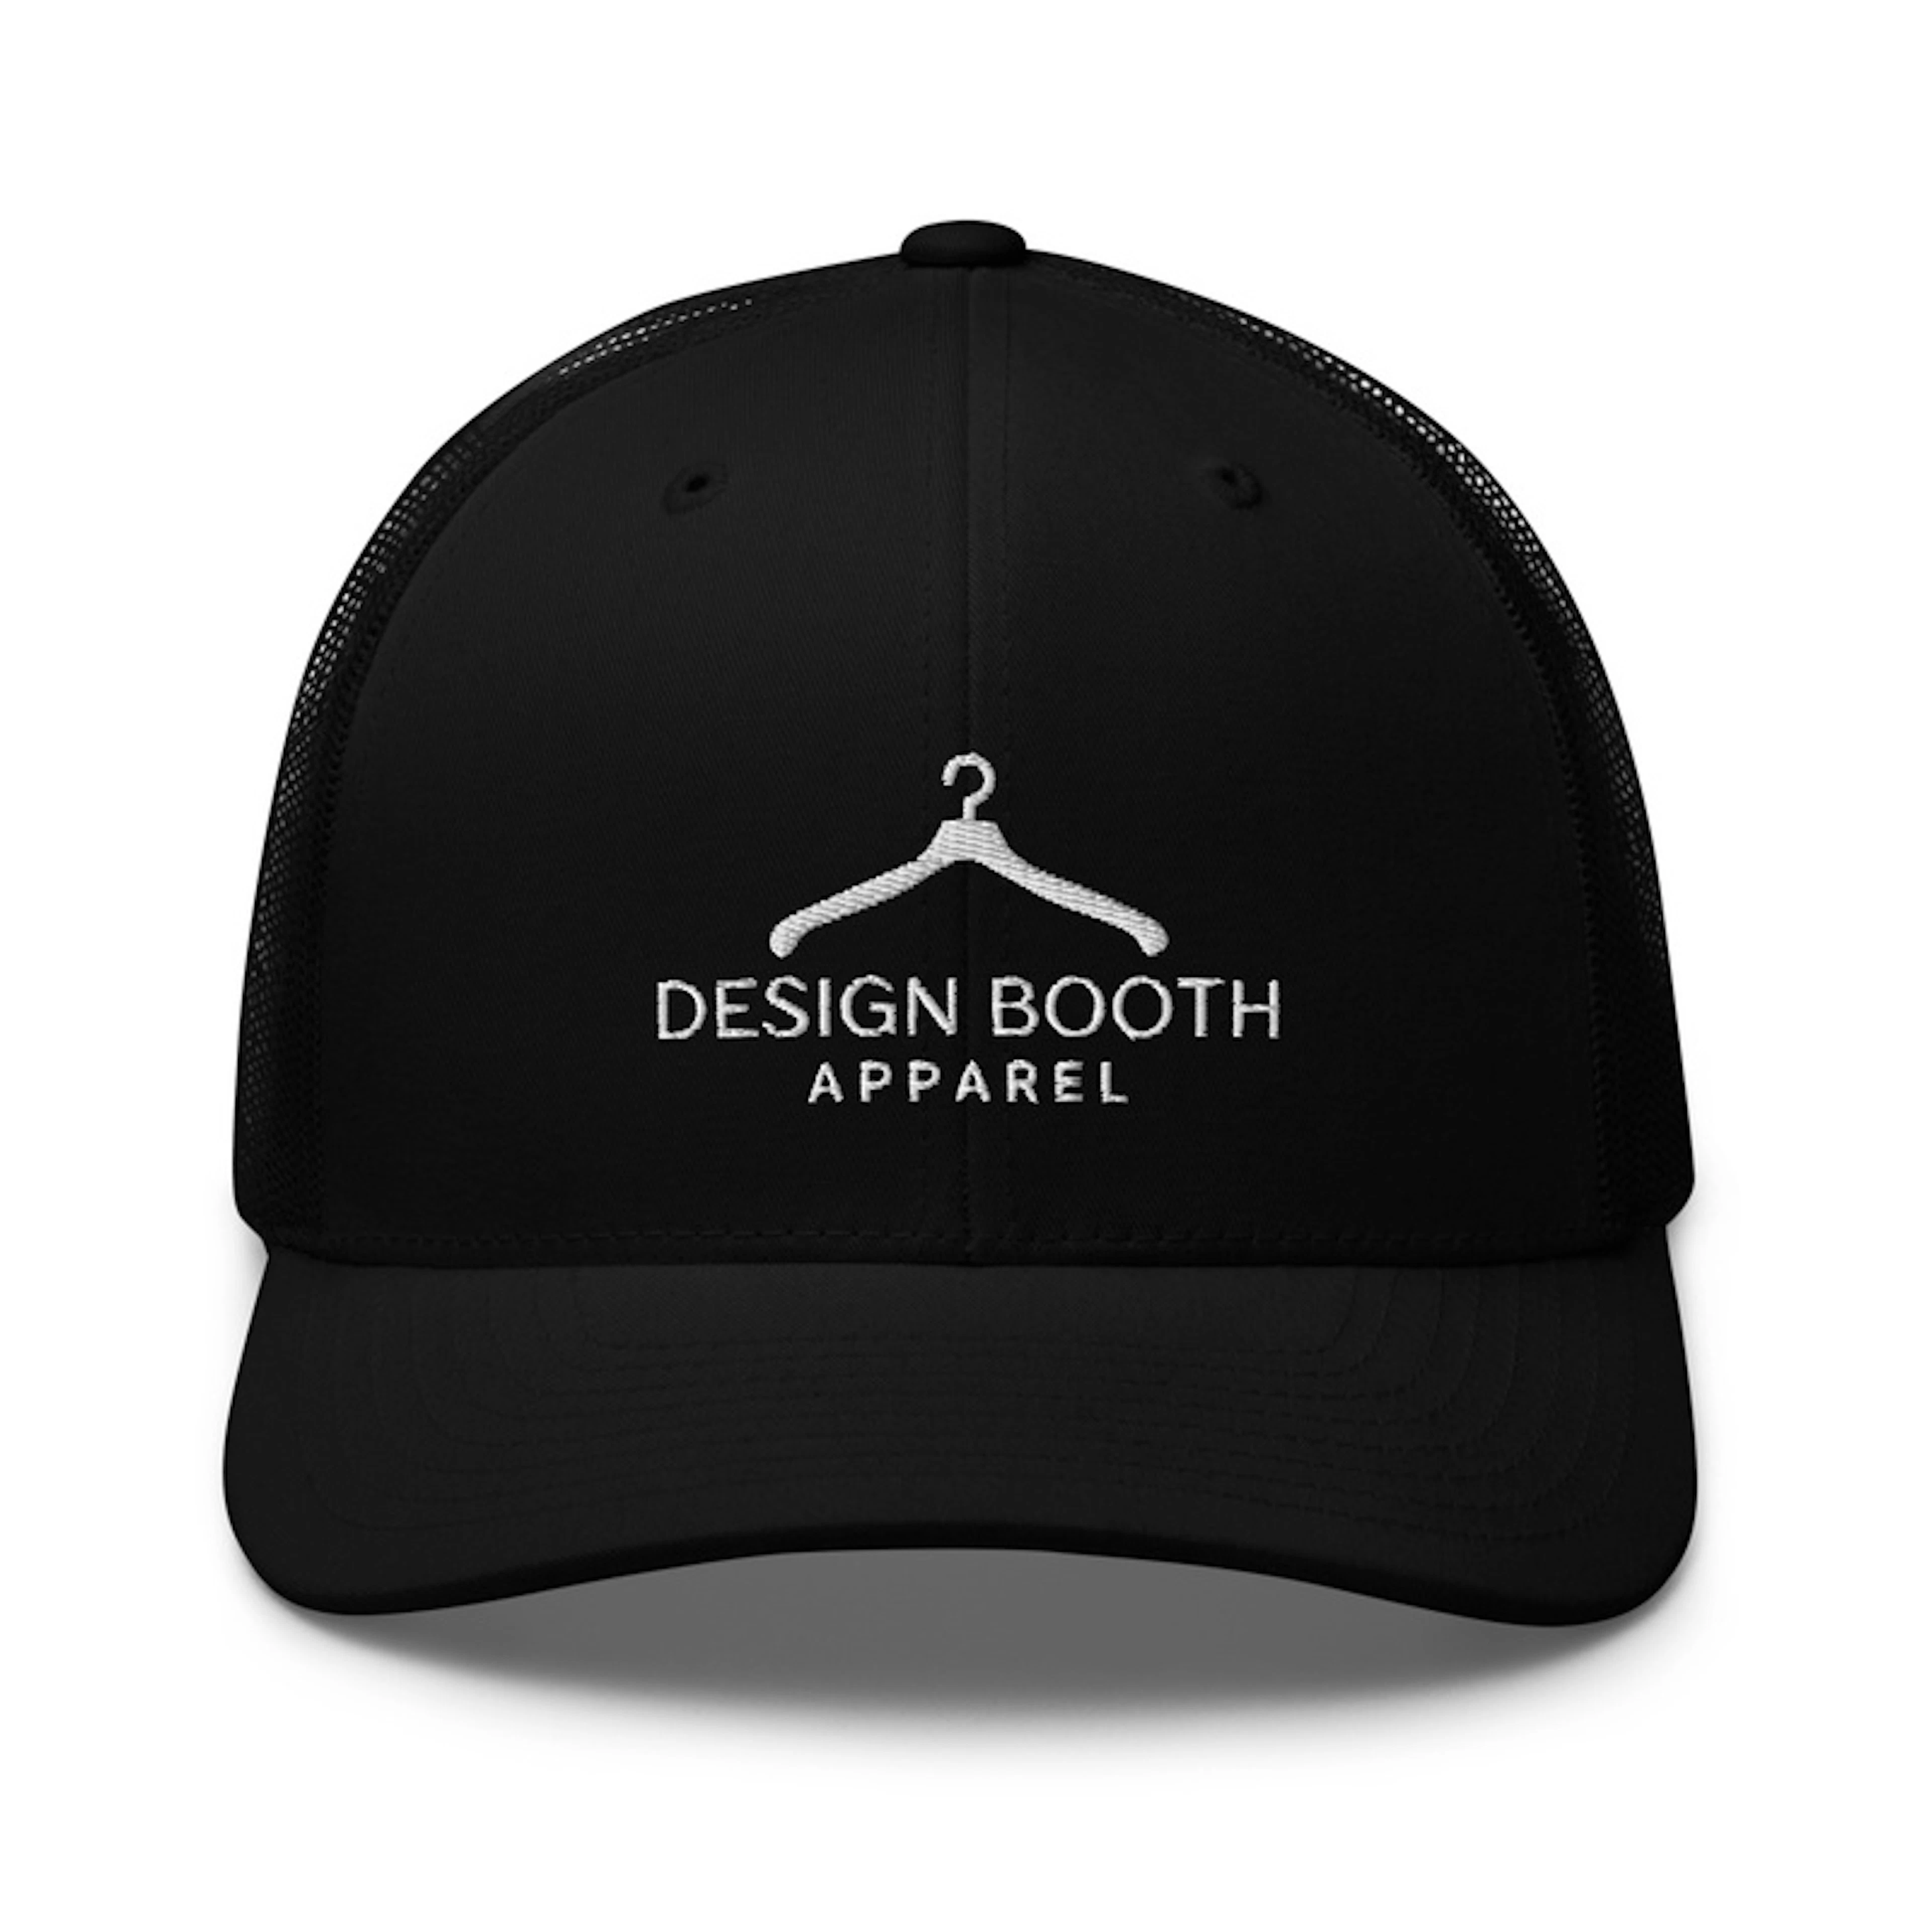 Design Booth Apparel Trucker Hat